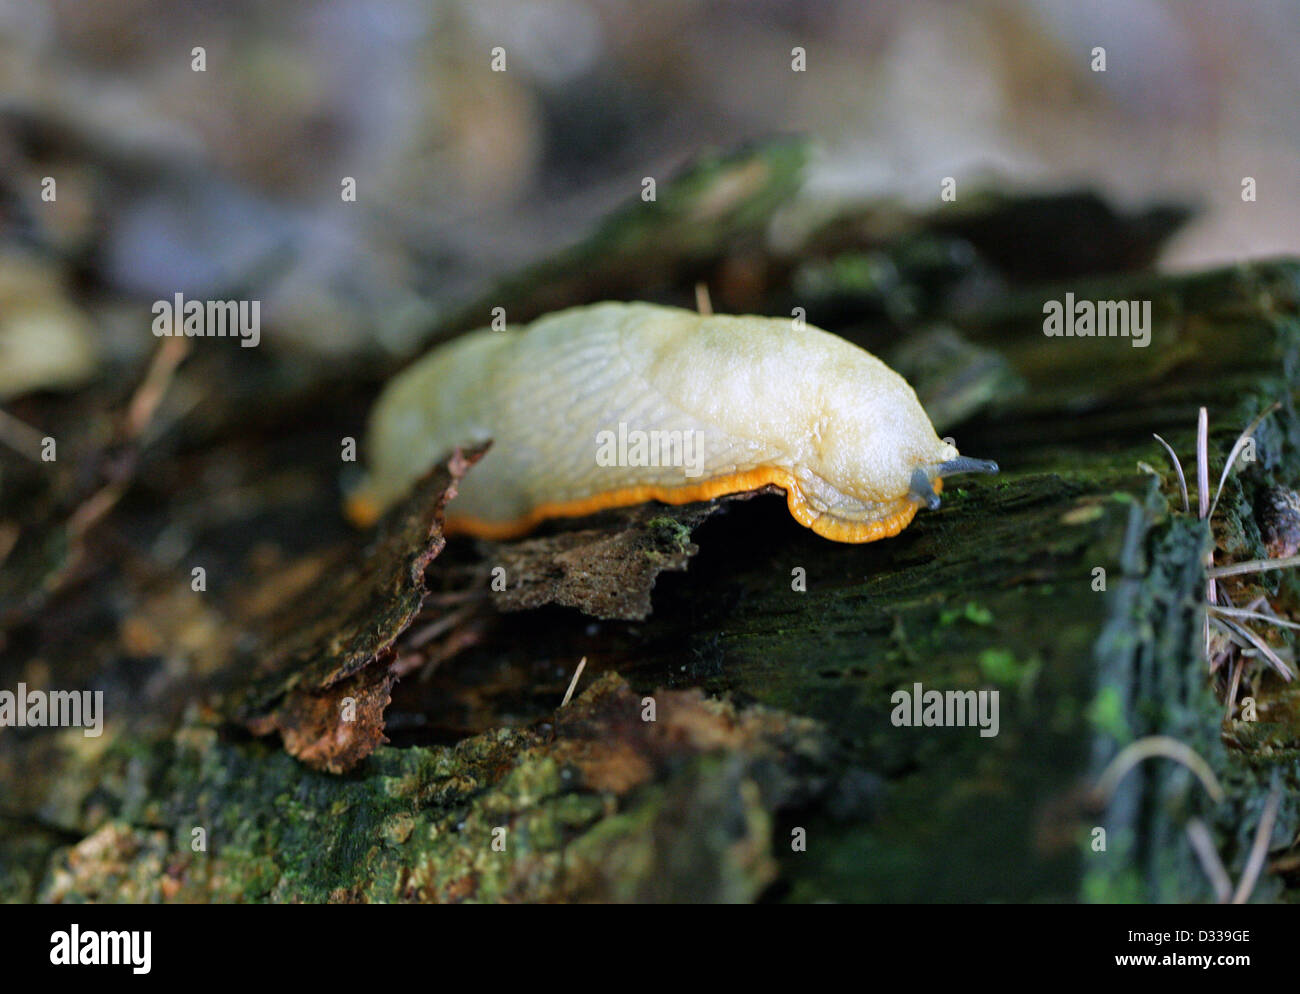 A White Form of the Black Slug, Arion ater, Arionidae, Mollusca. Stock Photo